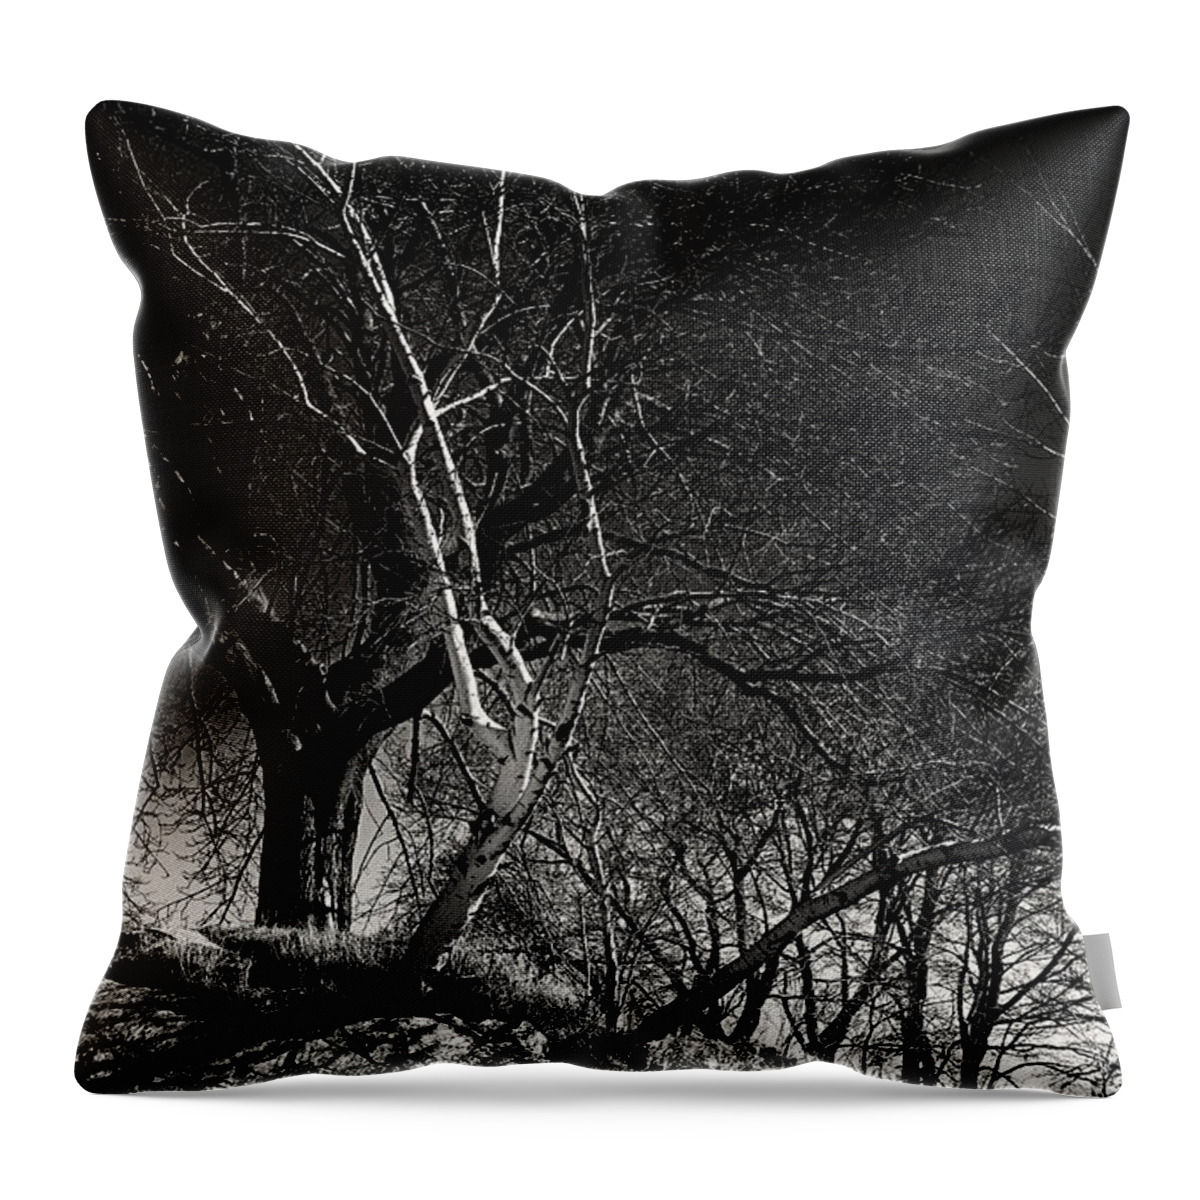 Salem Throw Pillow featuring the photograph Birch Tree On Beach Bluff by Jeff Folger